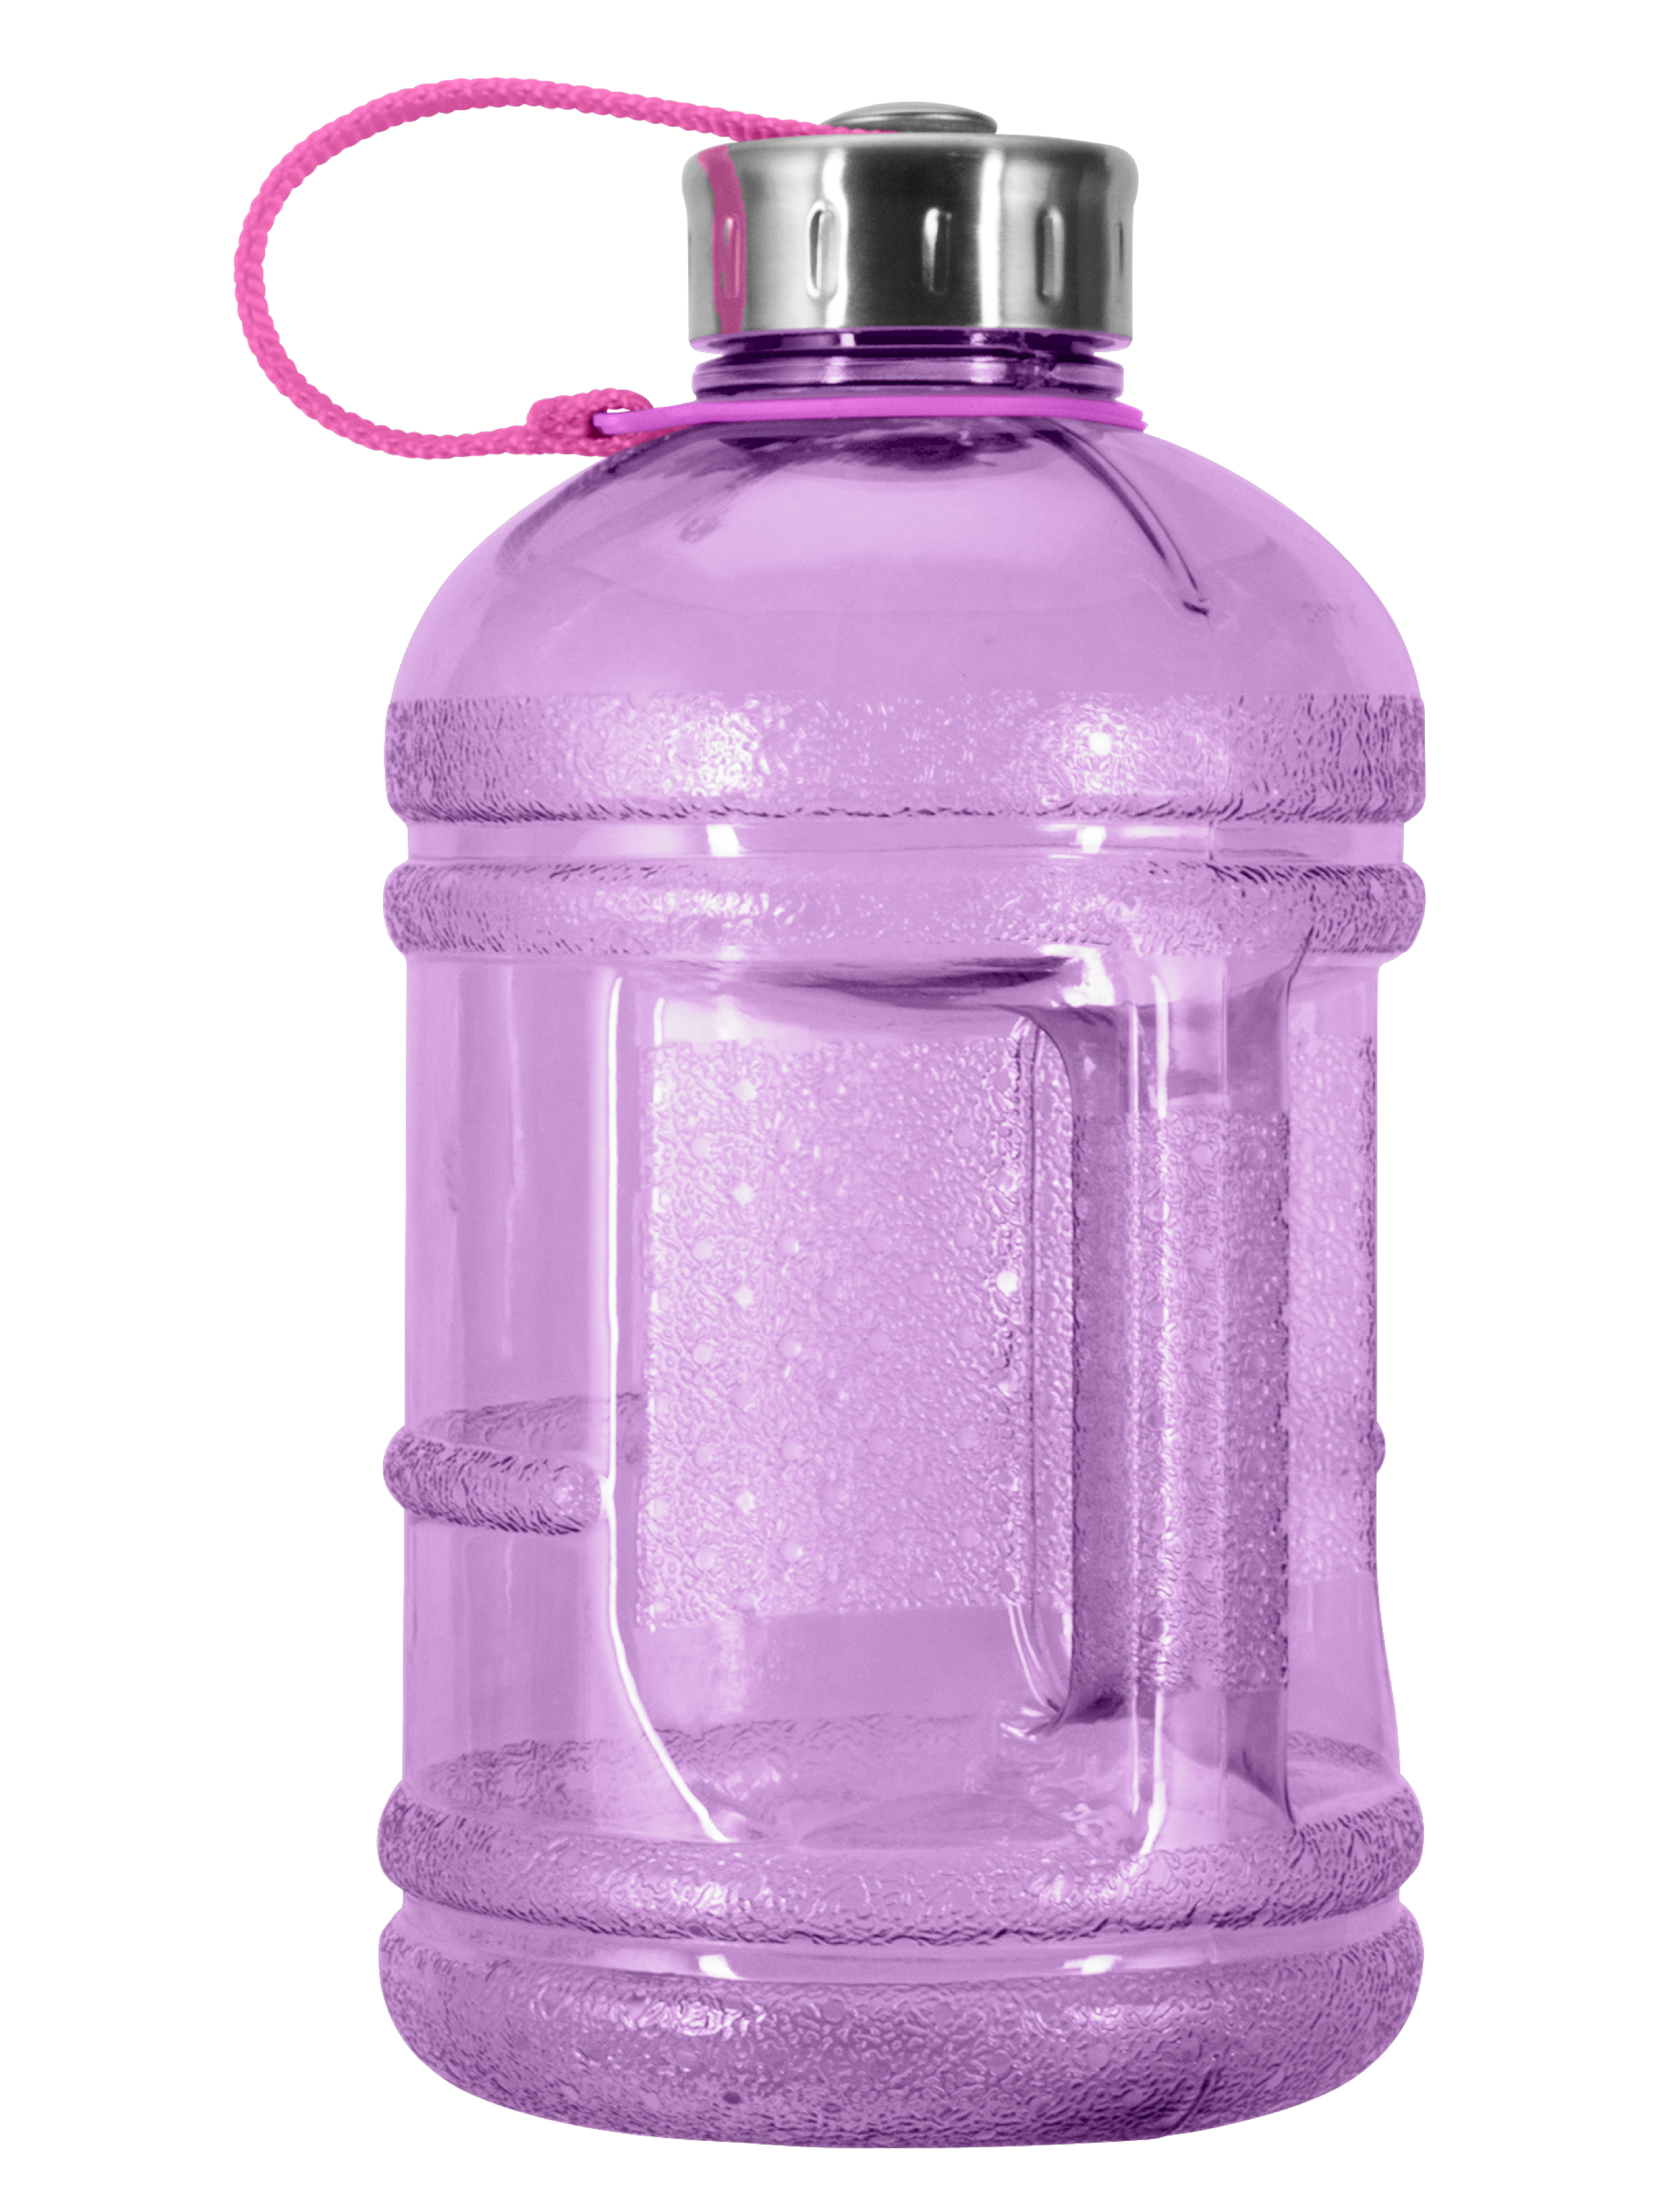 Bluewave Lifestyle Bullet BPA Free Sports Water Bottle, Candy Pink, 34 oz,  1 - Kroger